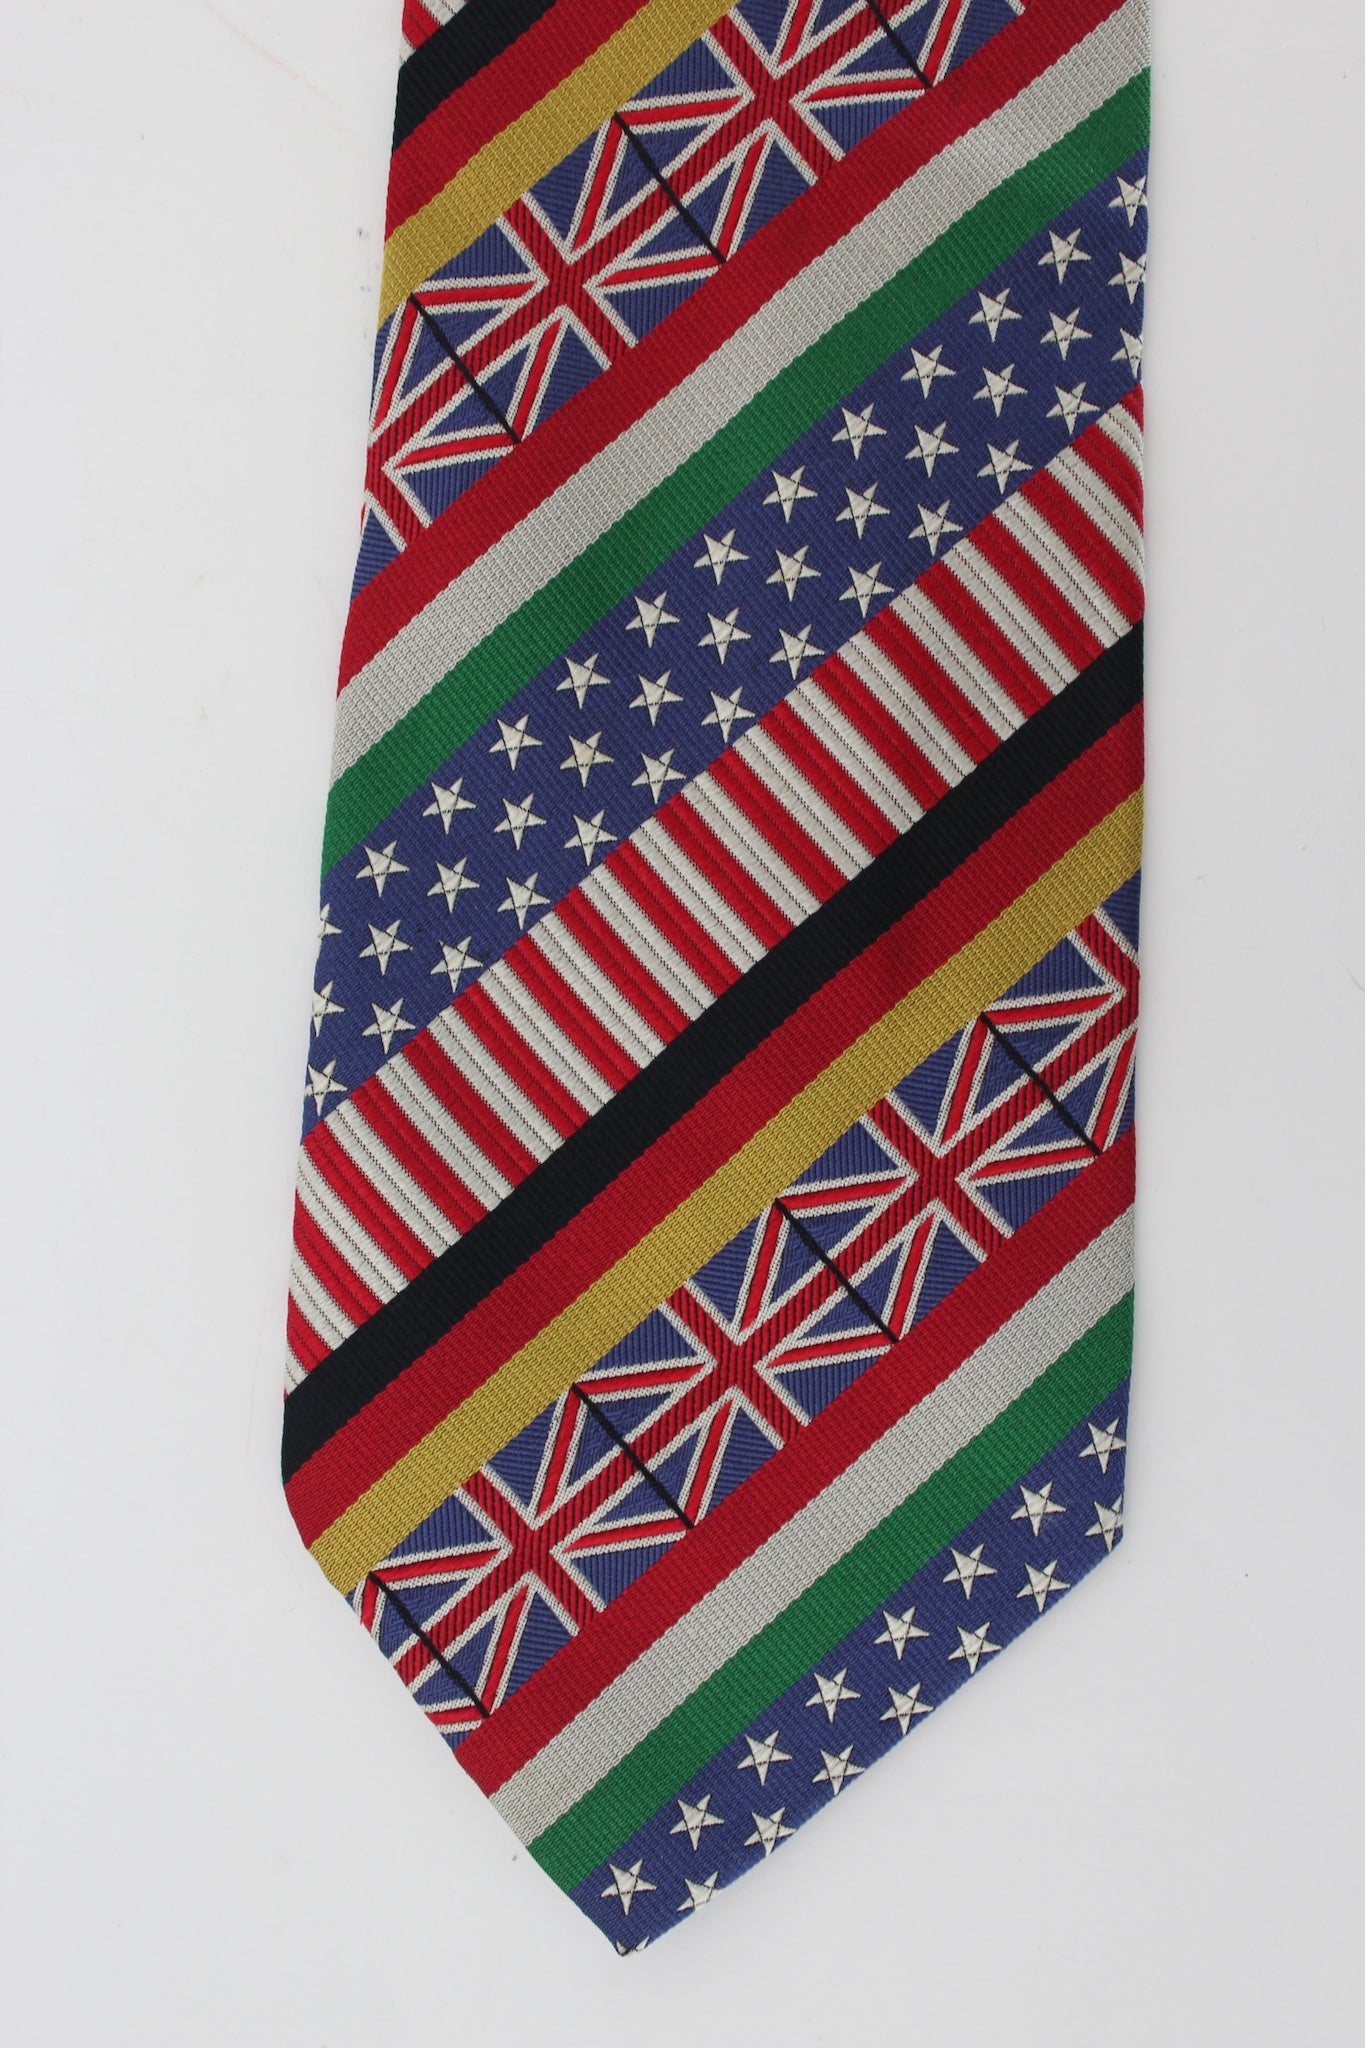 Moschino Iconic Flag Tie Vintage 90s